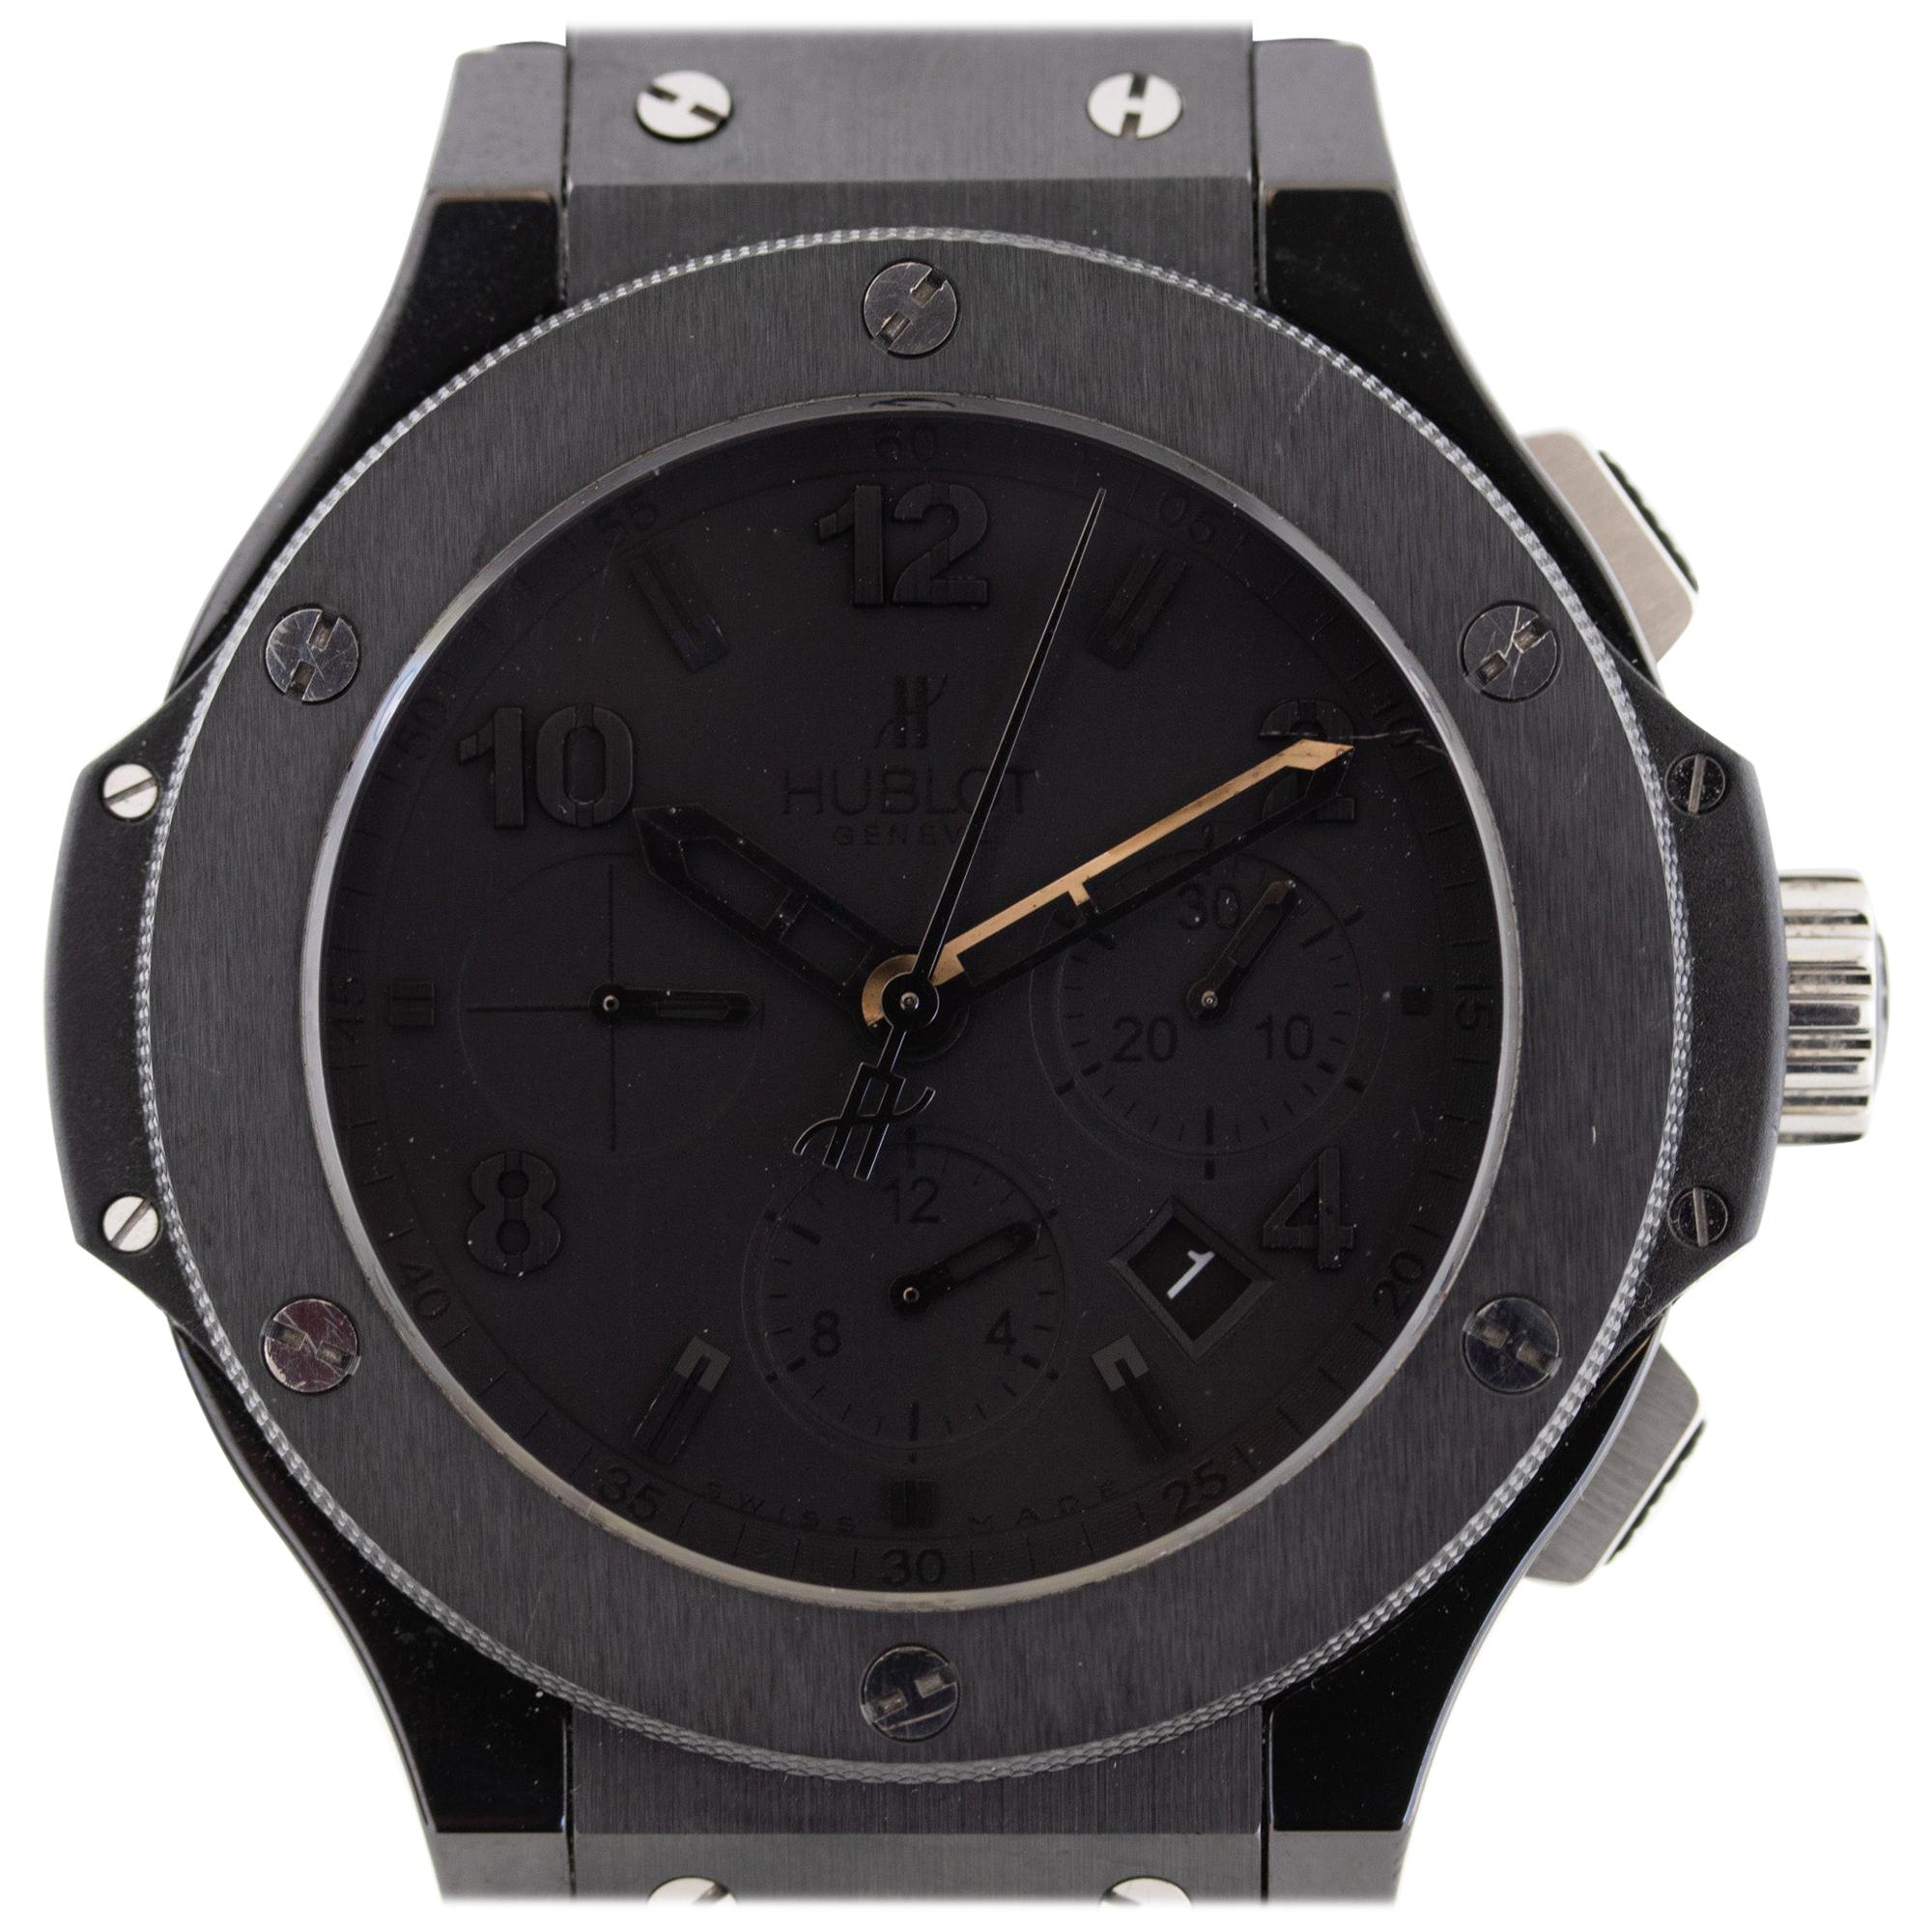 Hublot Big Bang All Black Chronograph Limited Edition Watch